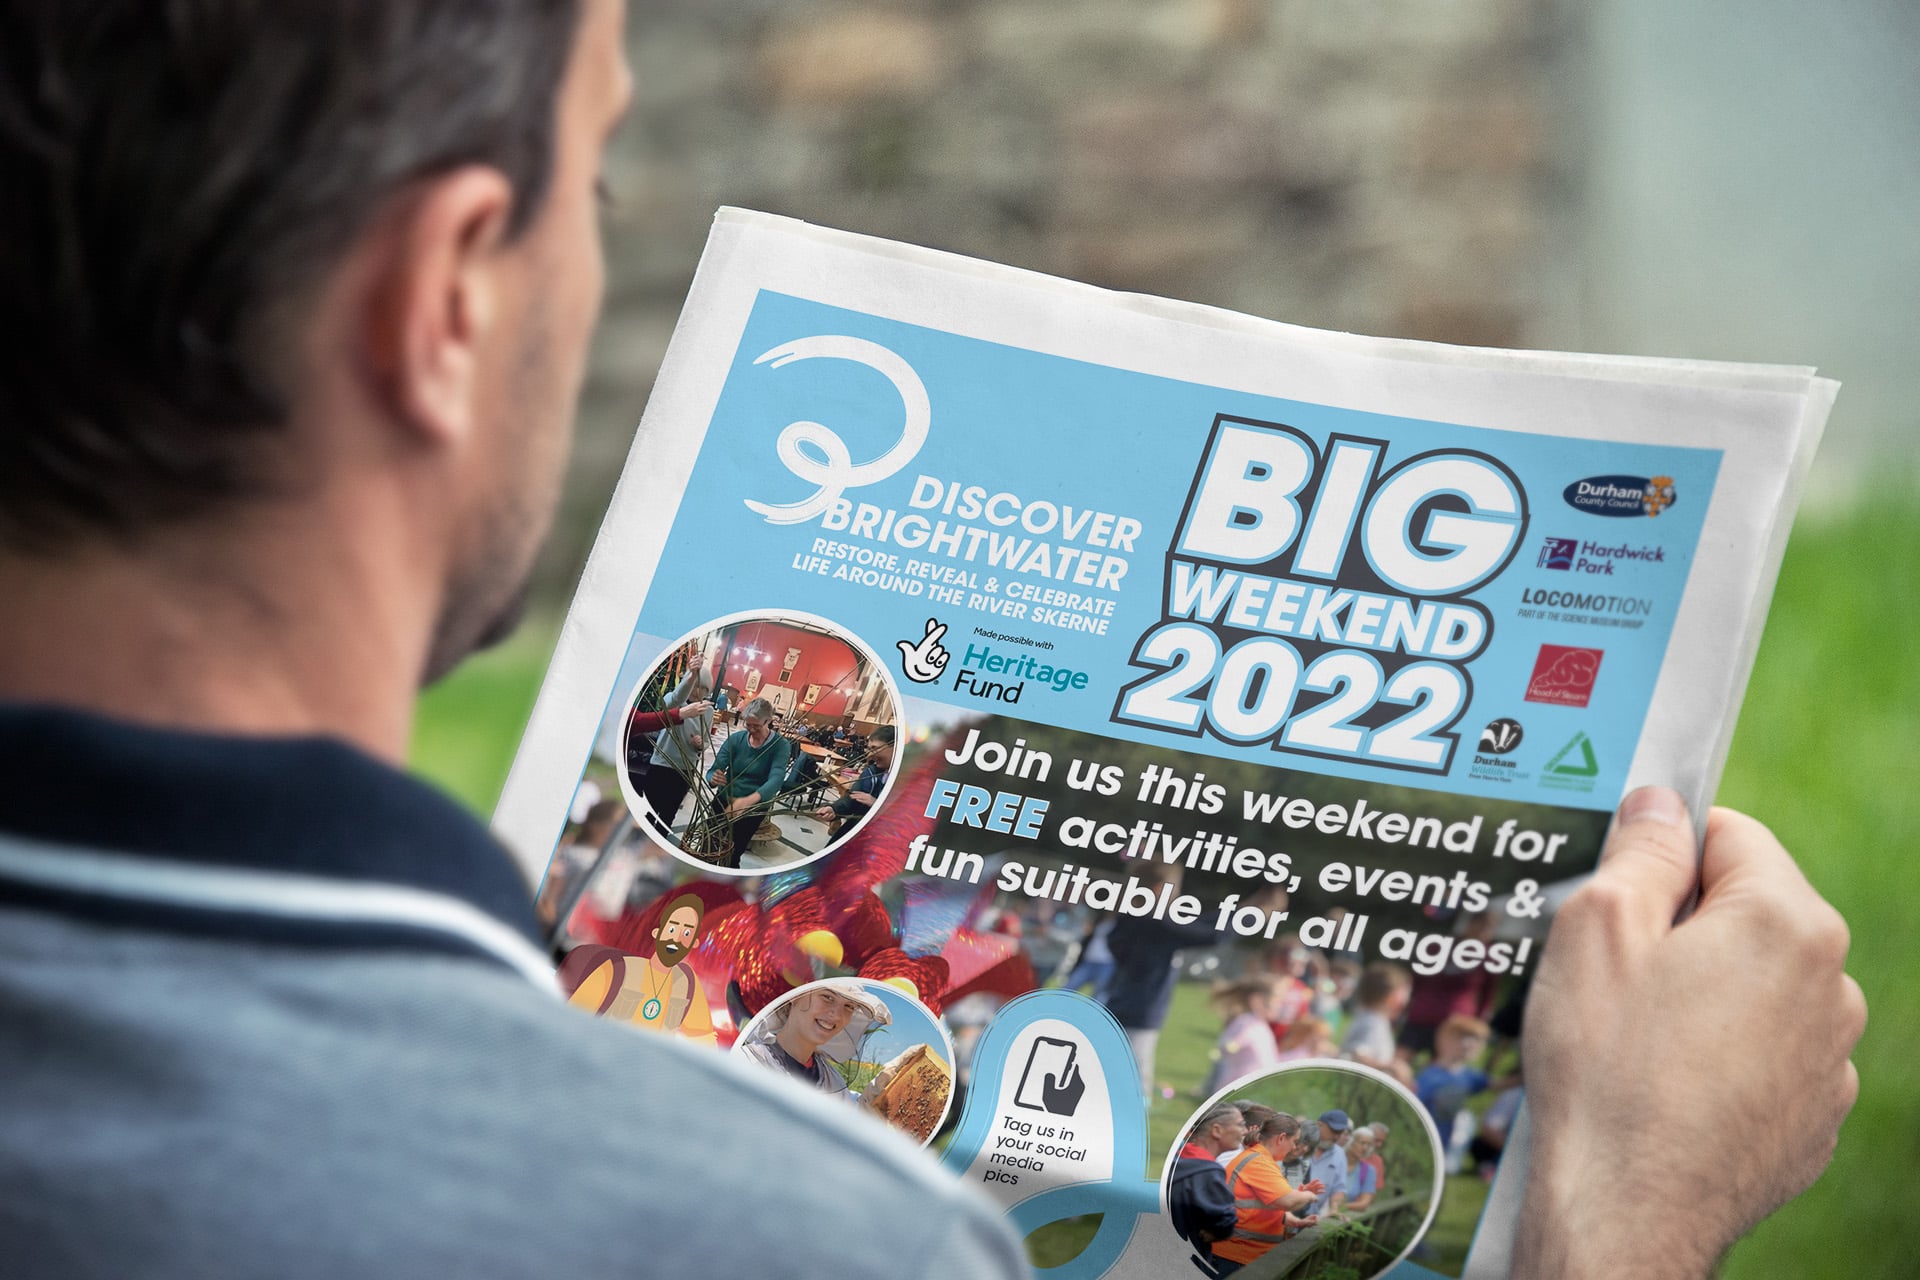 Big Weekend 2022 Discover Brightwater